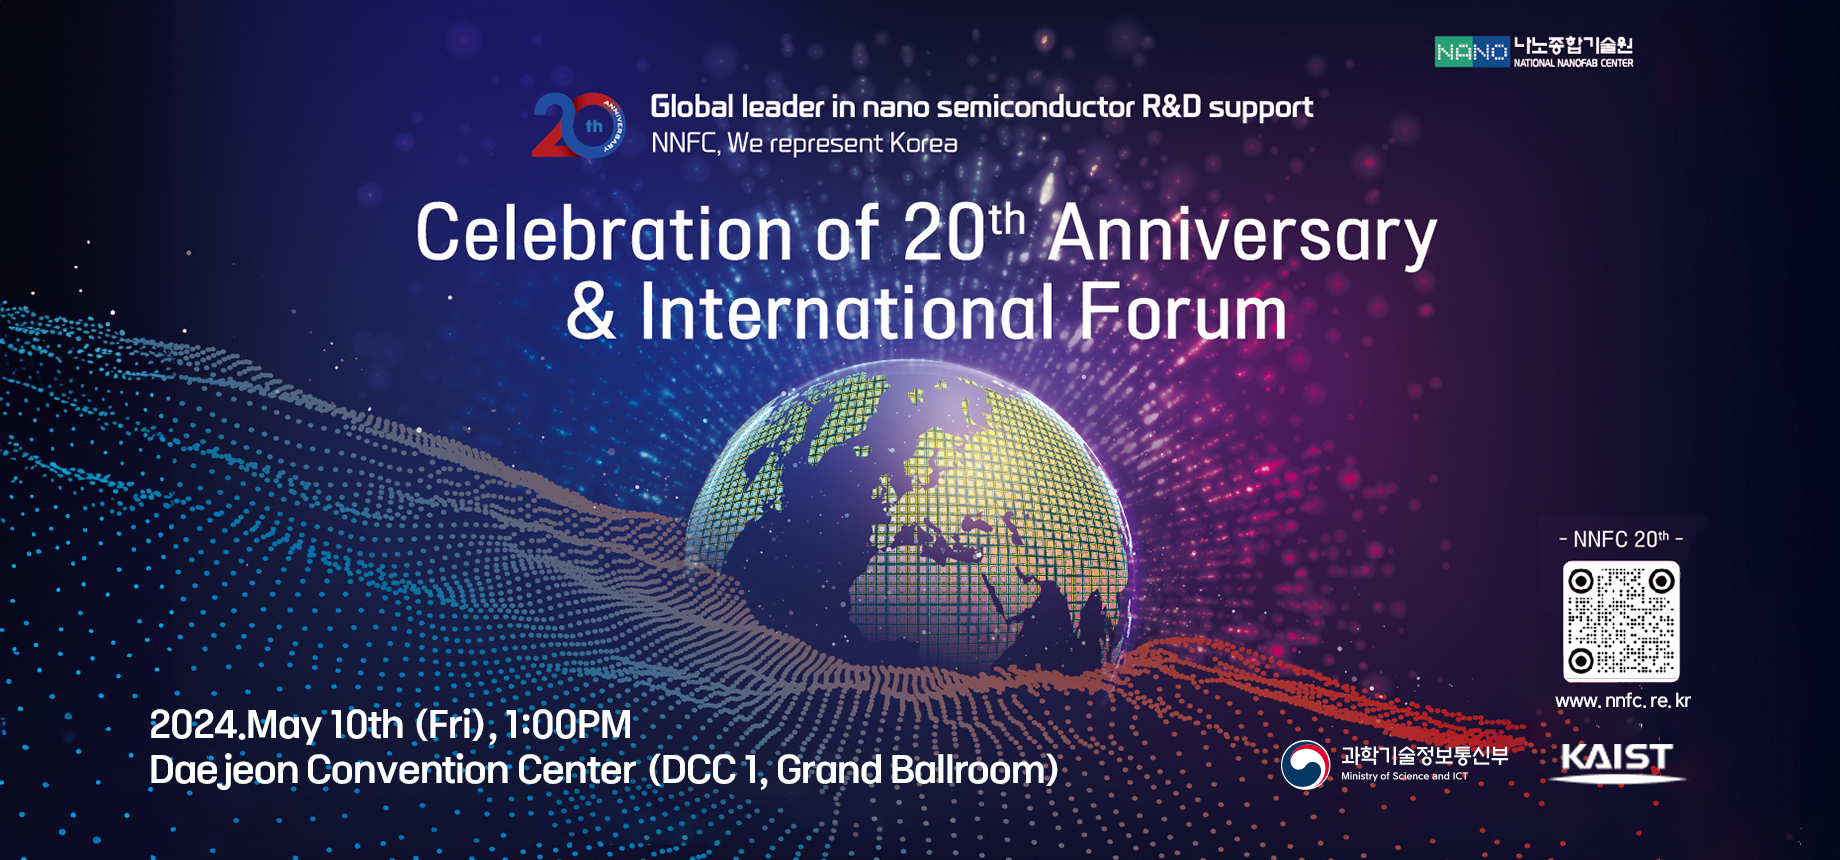 Celebration of 20th Anniversary & International Forum